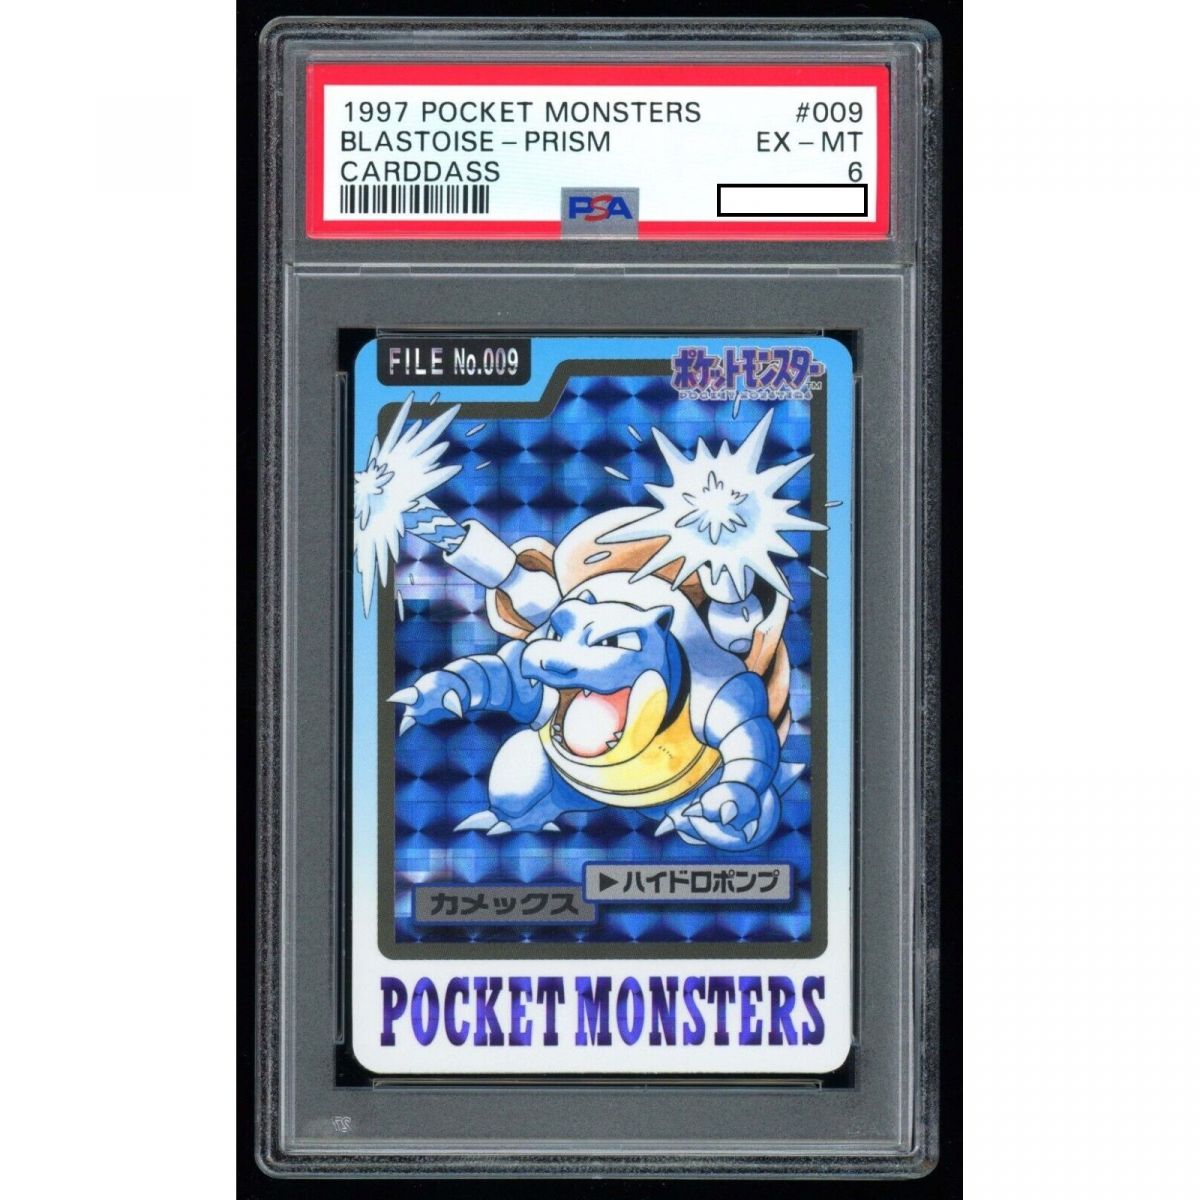 Item Pokémon - Graded Card - Blastoise 009 Prism Pocket Monster Carddass 1997 Japanese [PSA 6 - EX-MT]